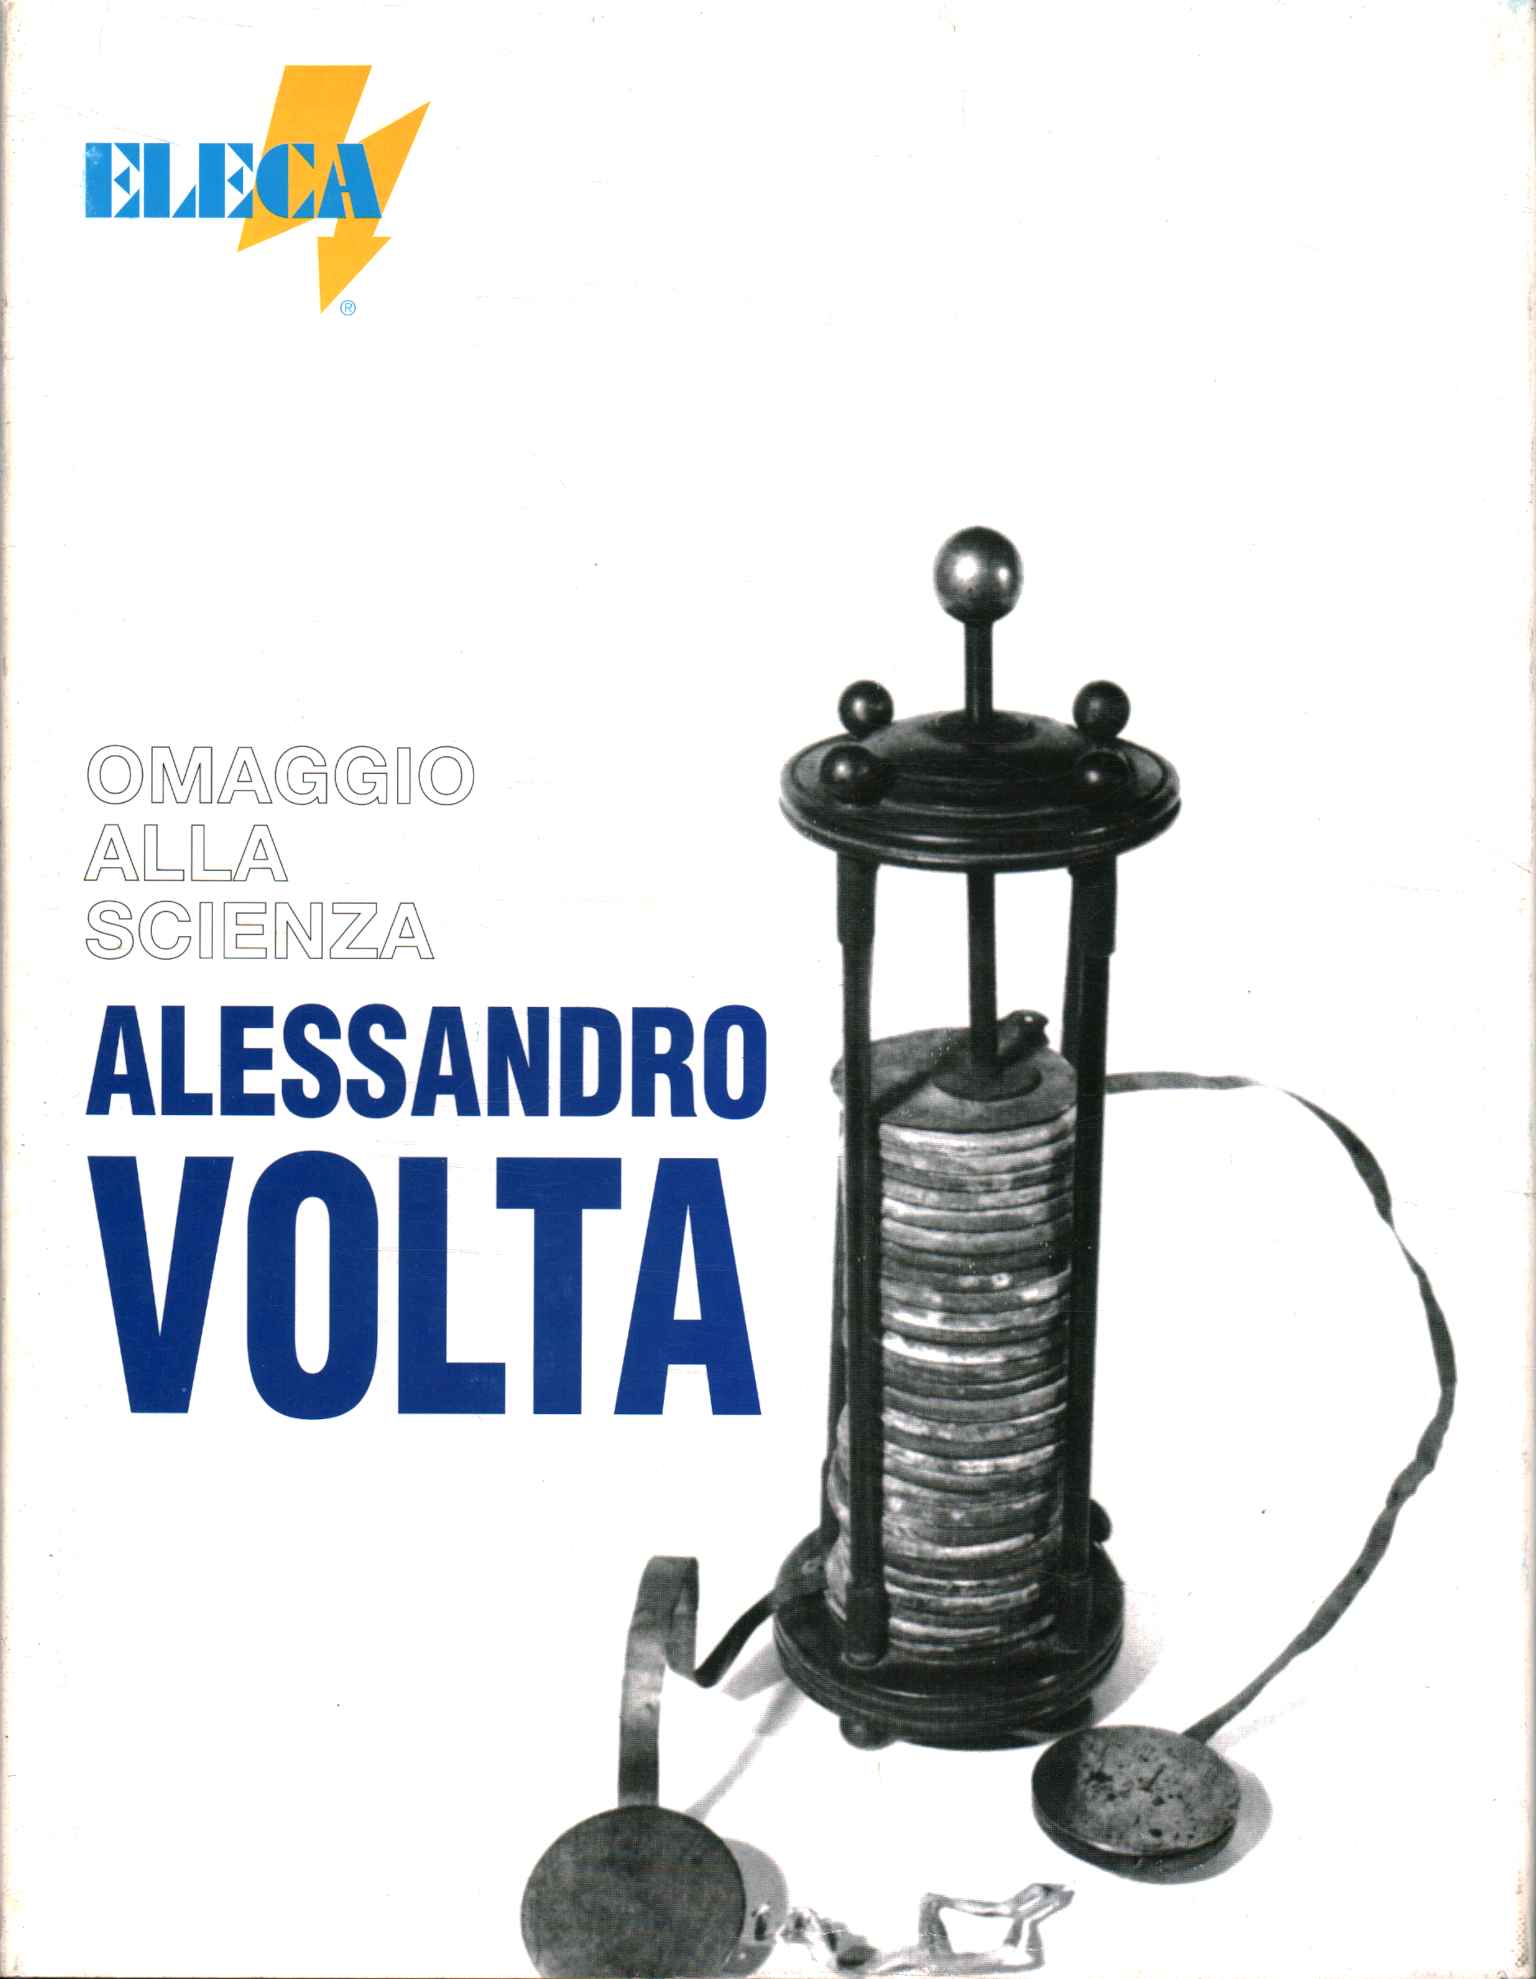 Homage to science. Alessandro Volta